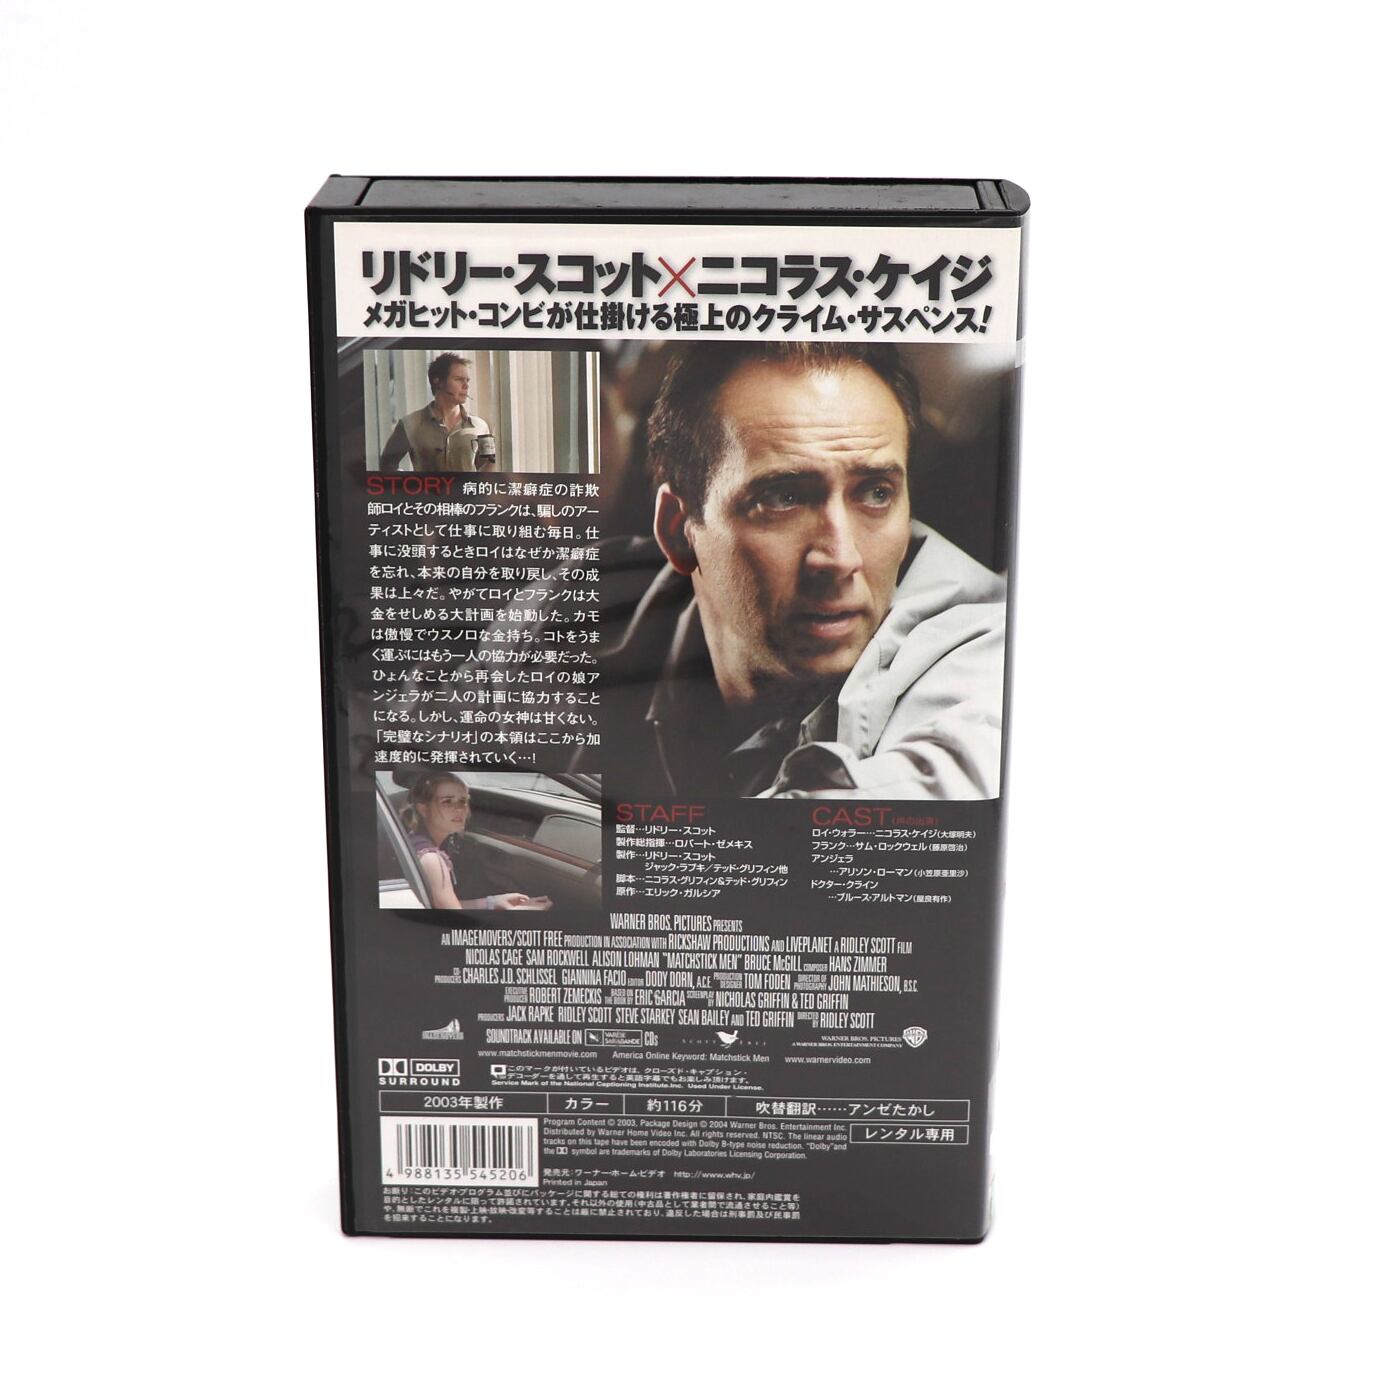 VHSビデオ・『マッチスティックメン』・吹替版・映画・No.200902-066